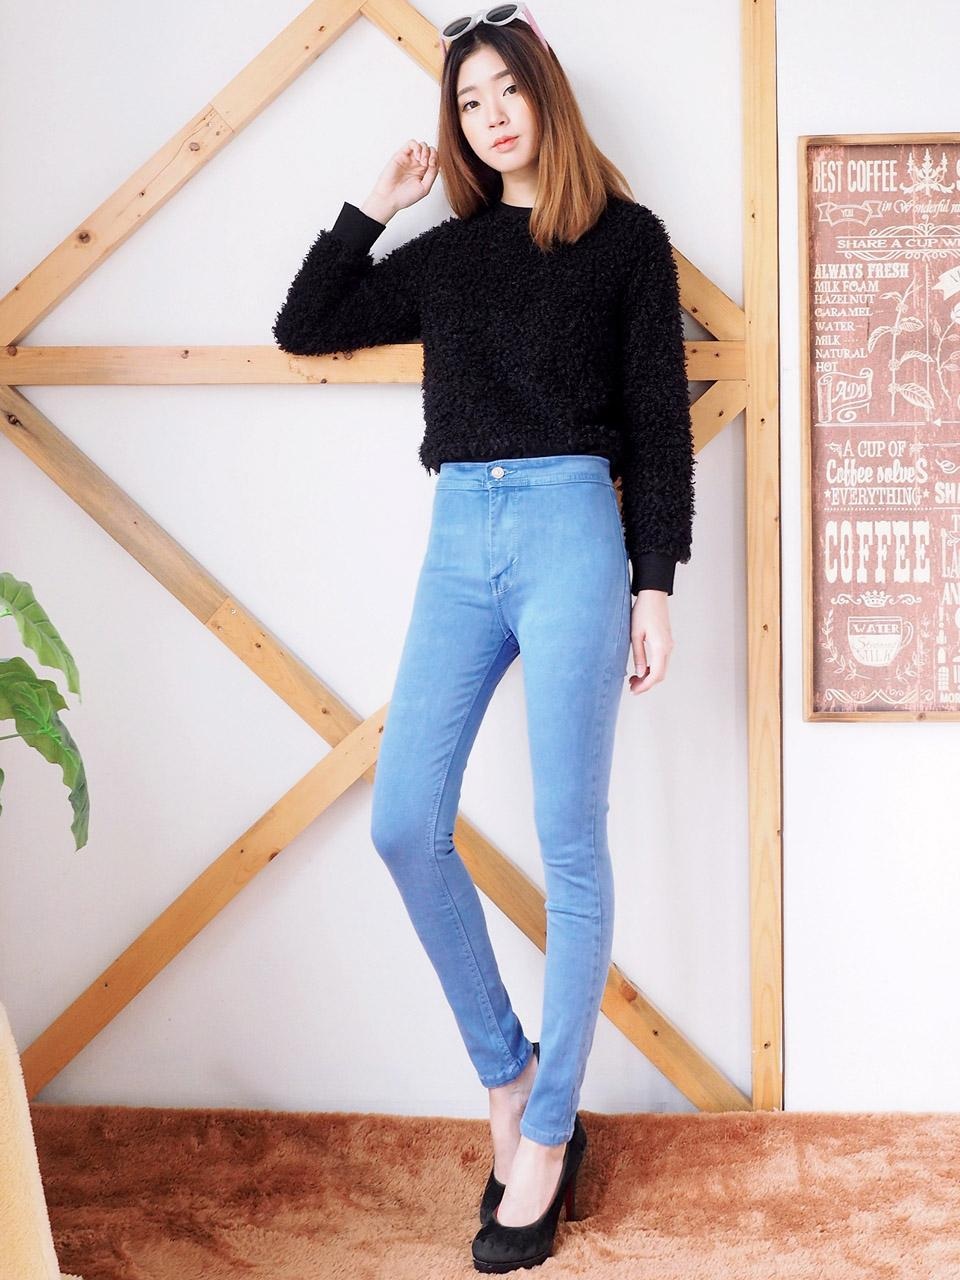  Baju Yg Cocok Untuk Celana Jeans  Biru Muda Tips Mencocokan